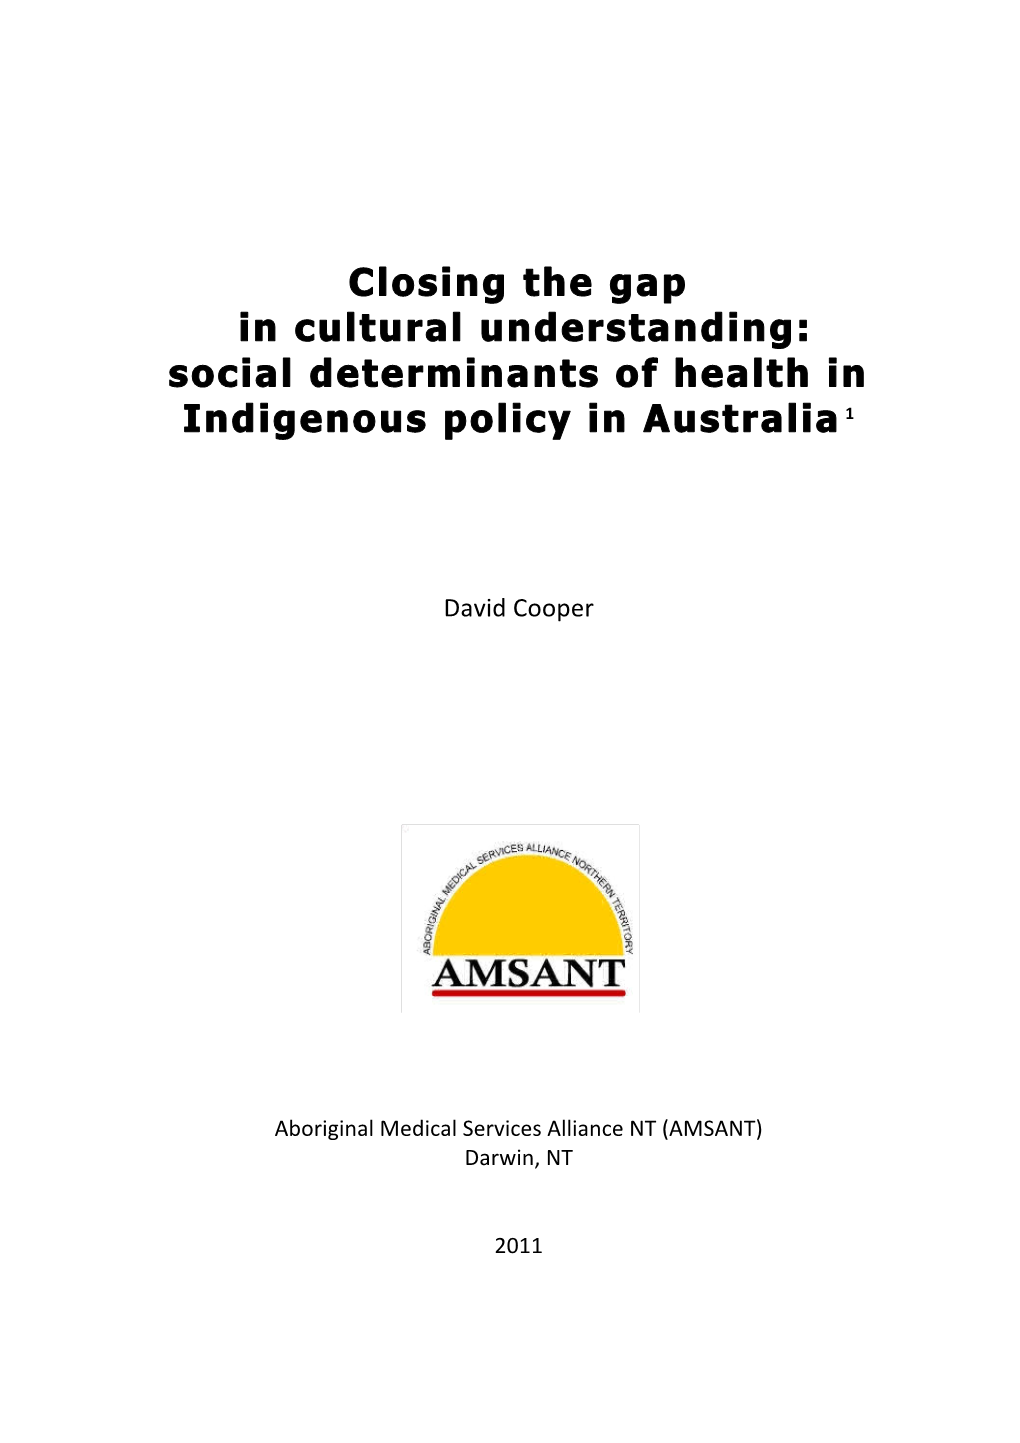 Social Determinants of Health in Indigenous Policy in Australia 1